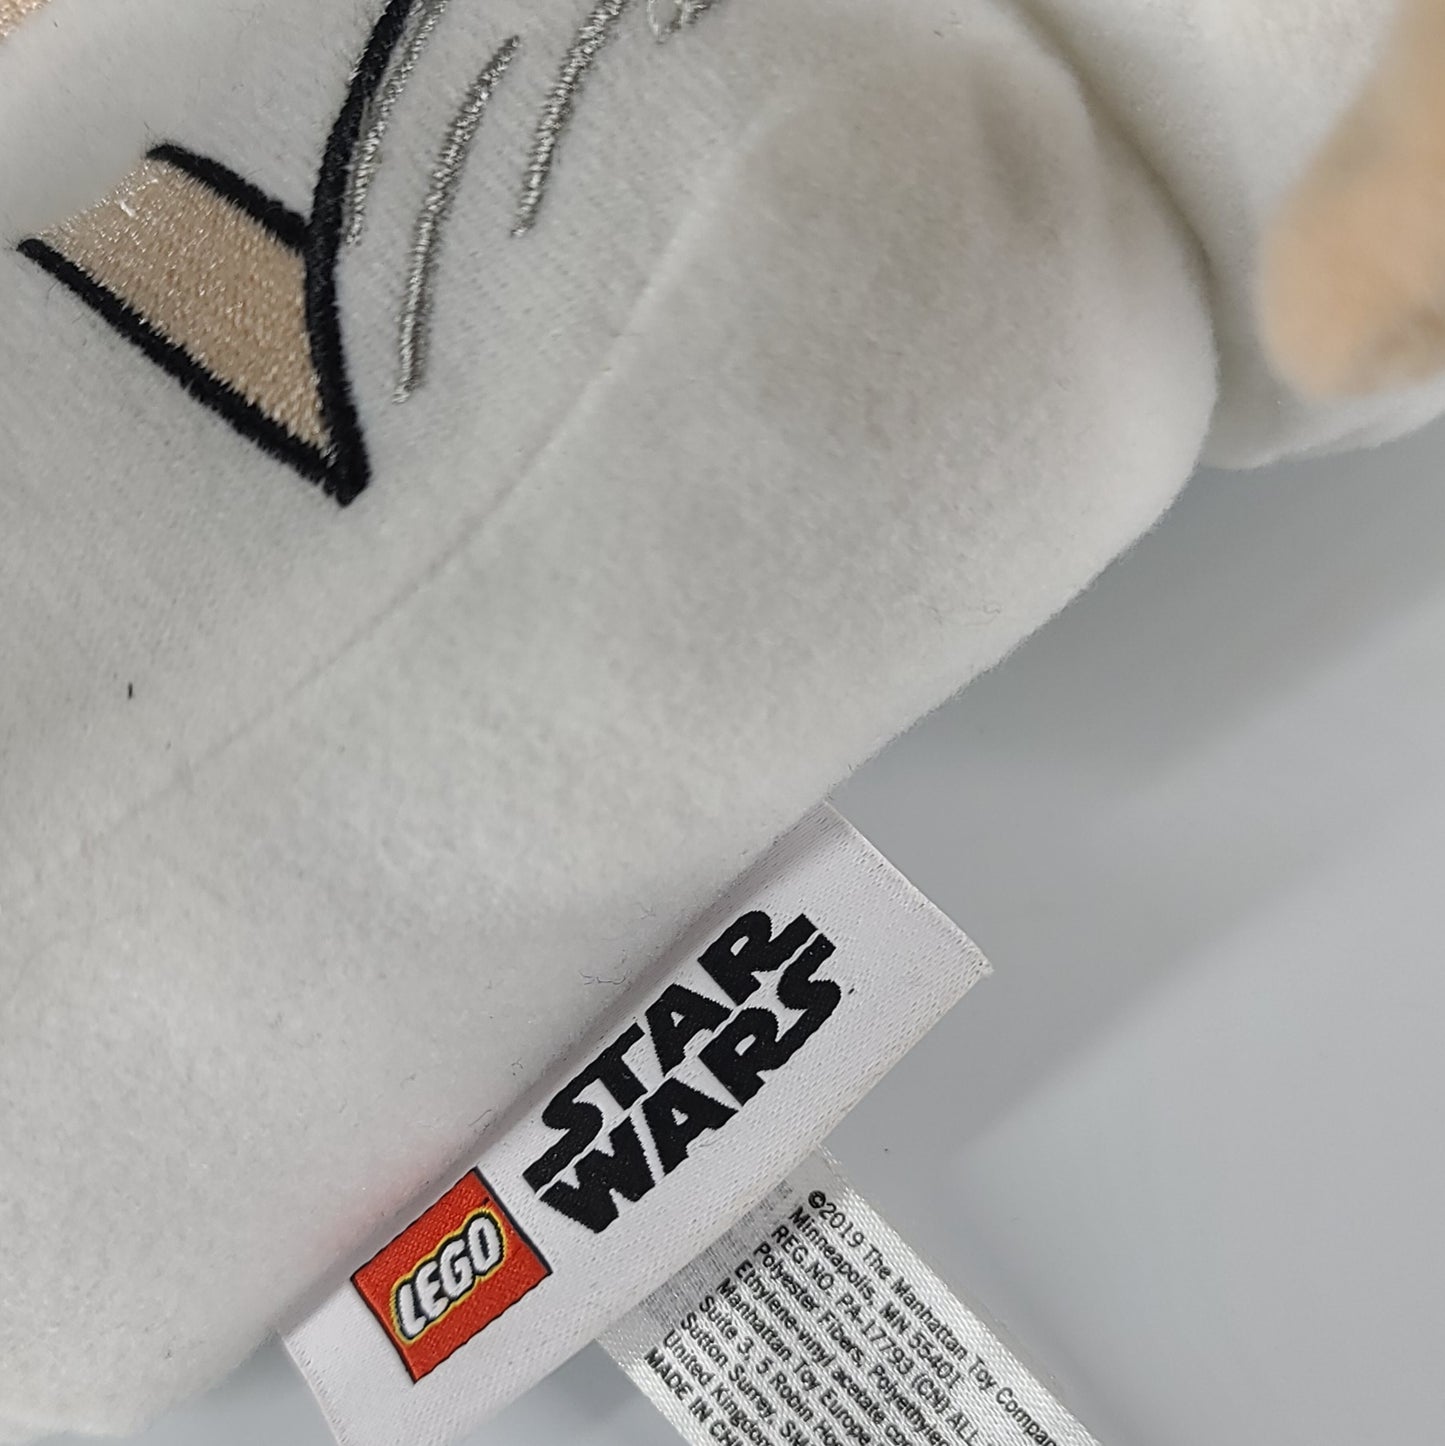 Lego x Star Wars 'Rey' Plush